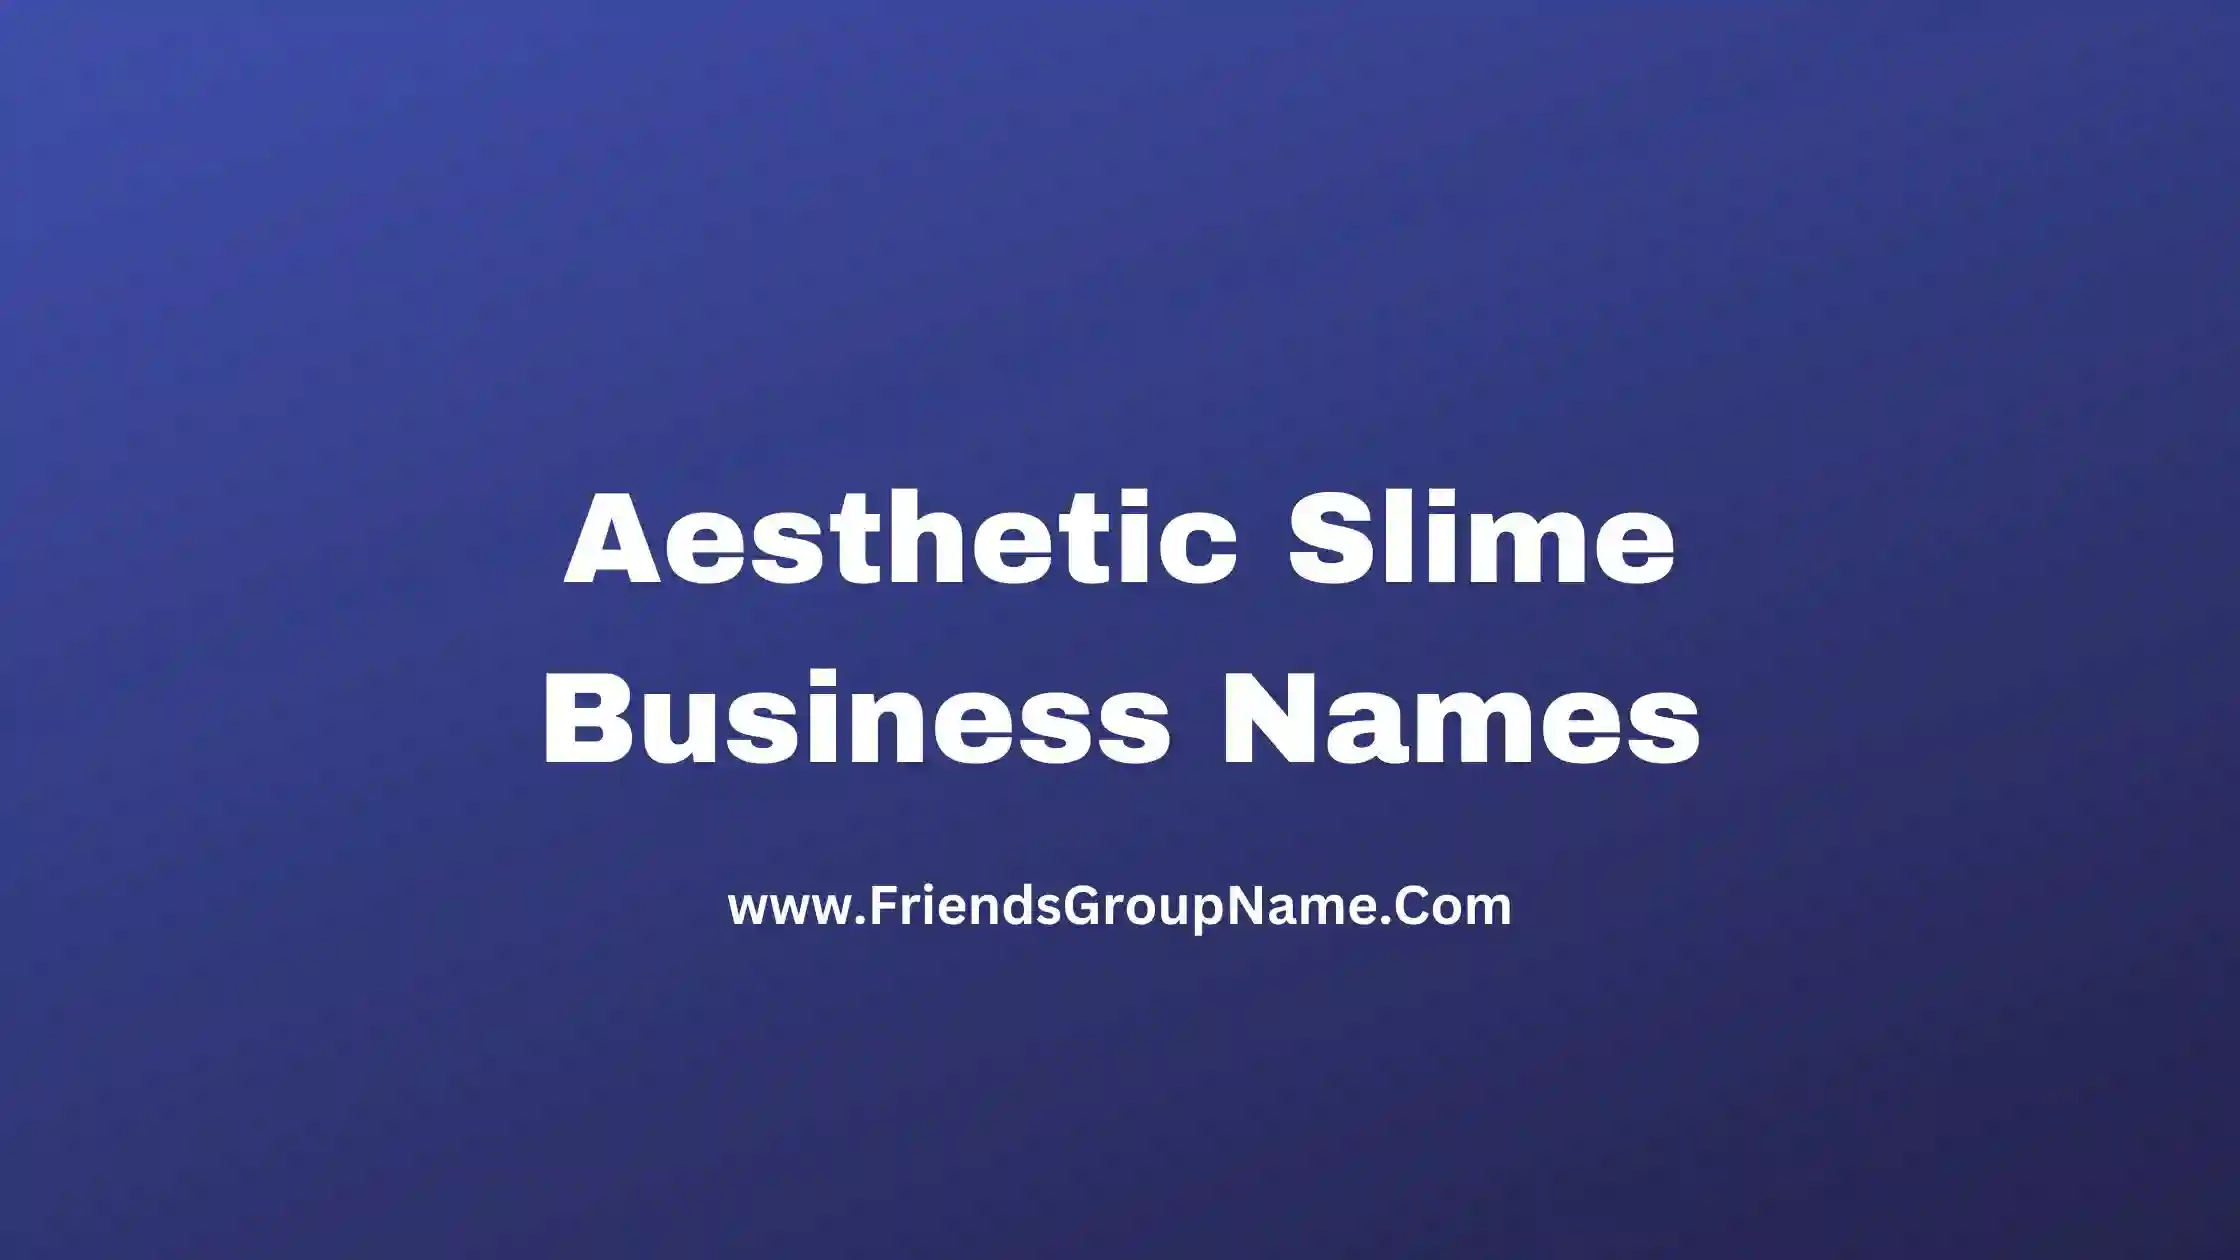 Aesthetic Slime Business Names